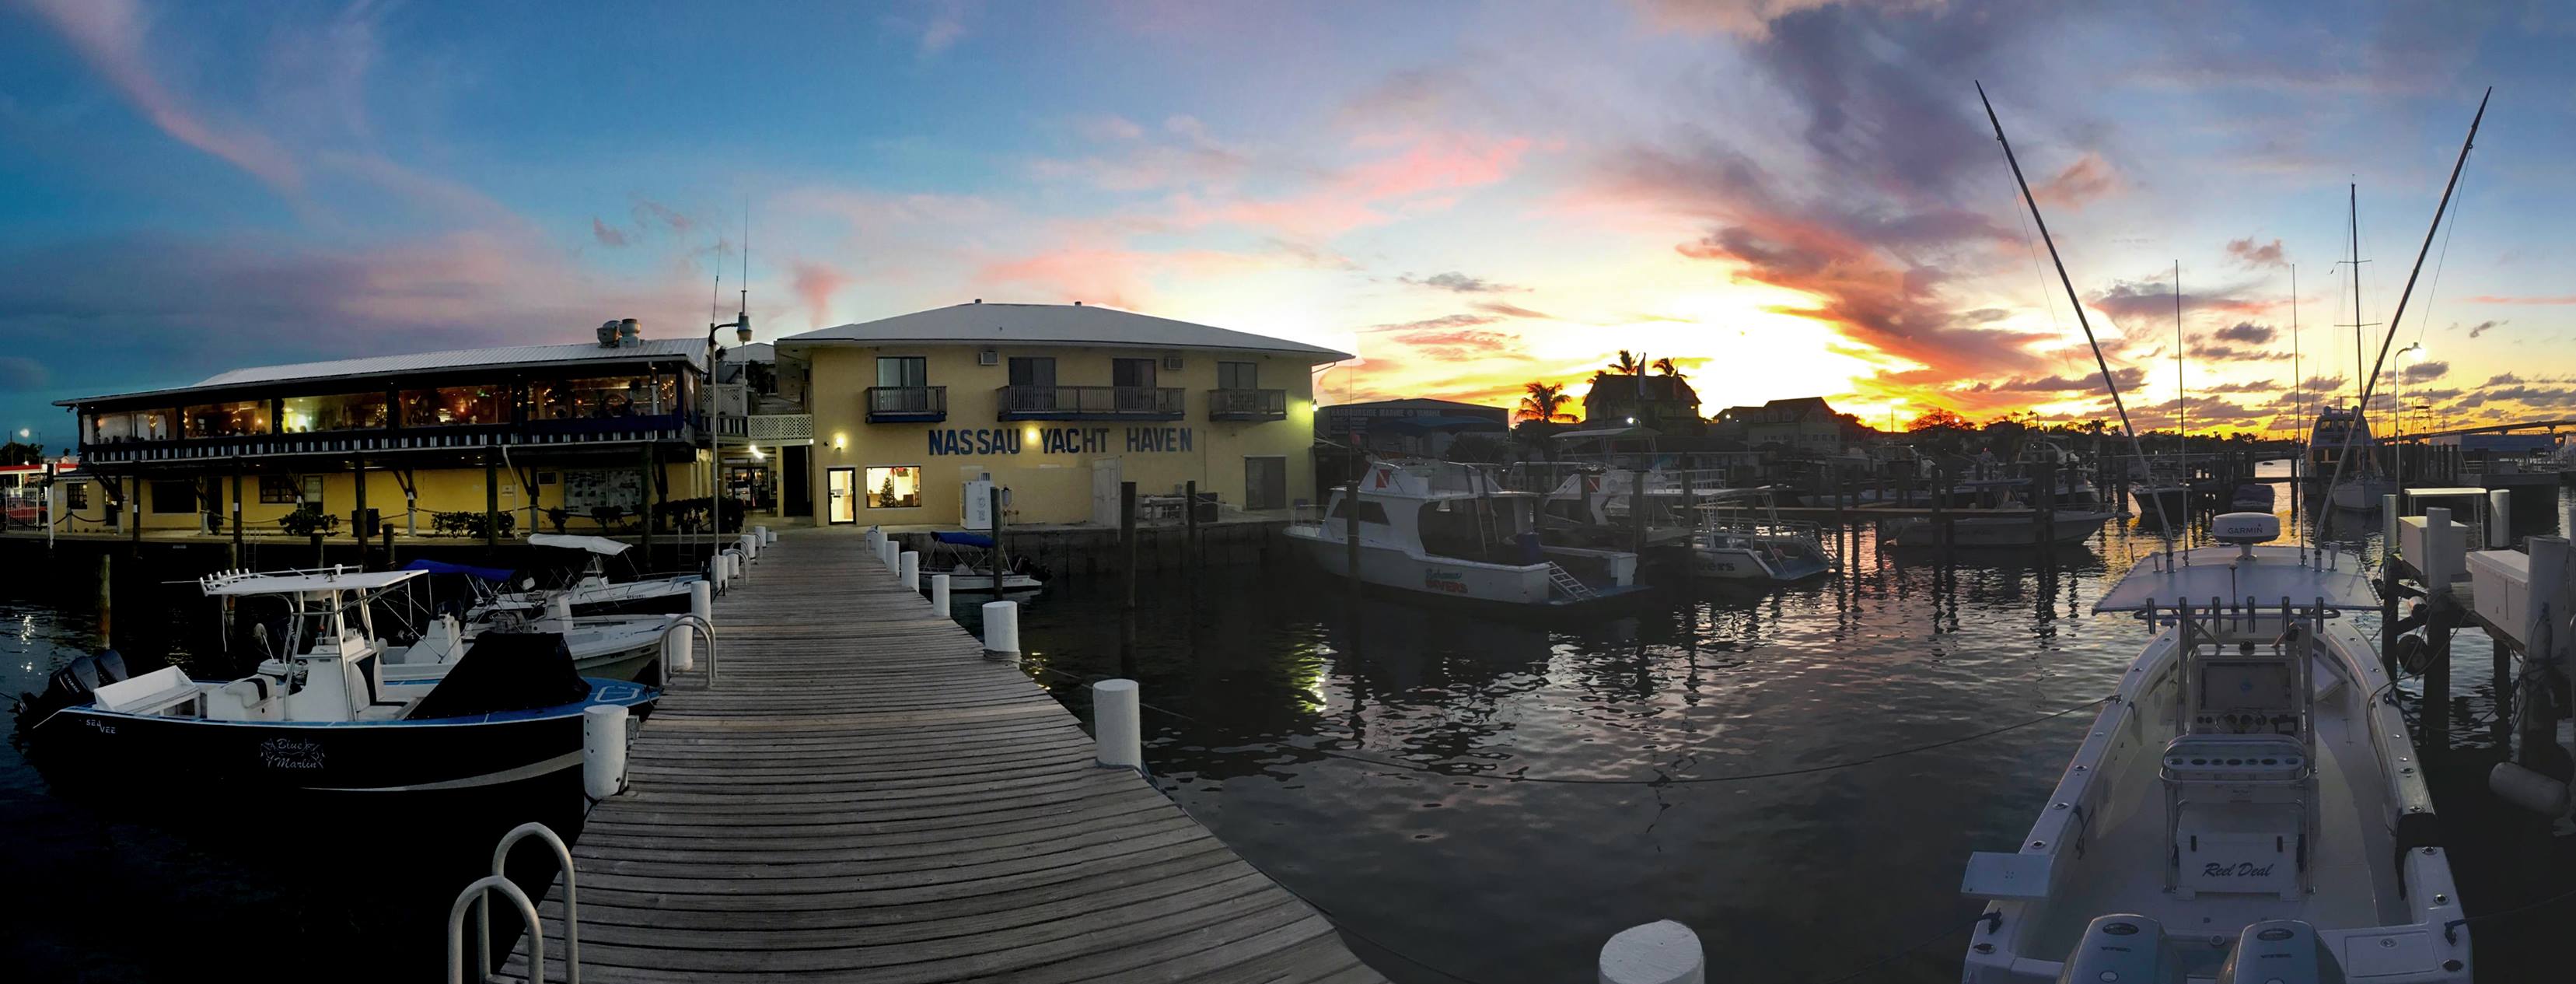 Nassau Yacht Haven Docks | 2019 top destinations | Snag-A-Slip